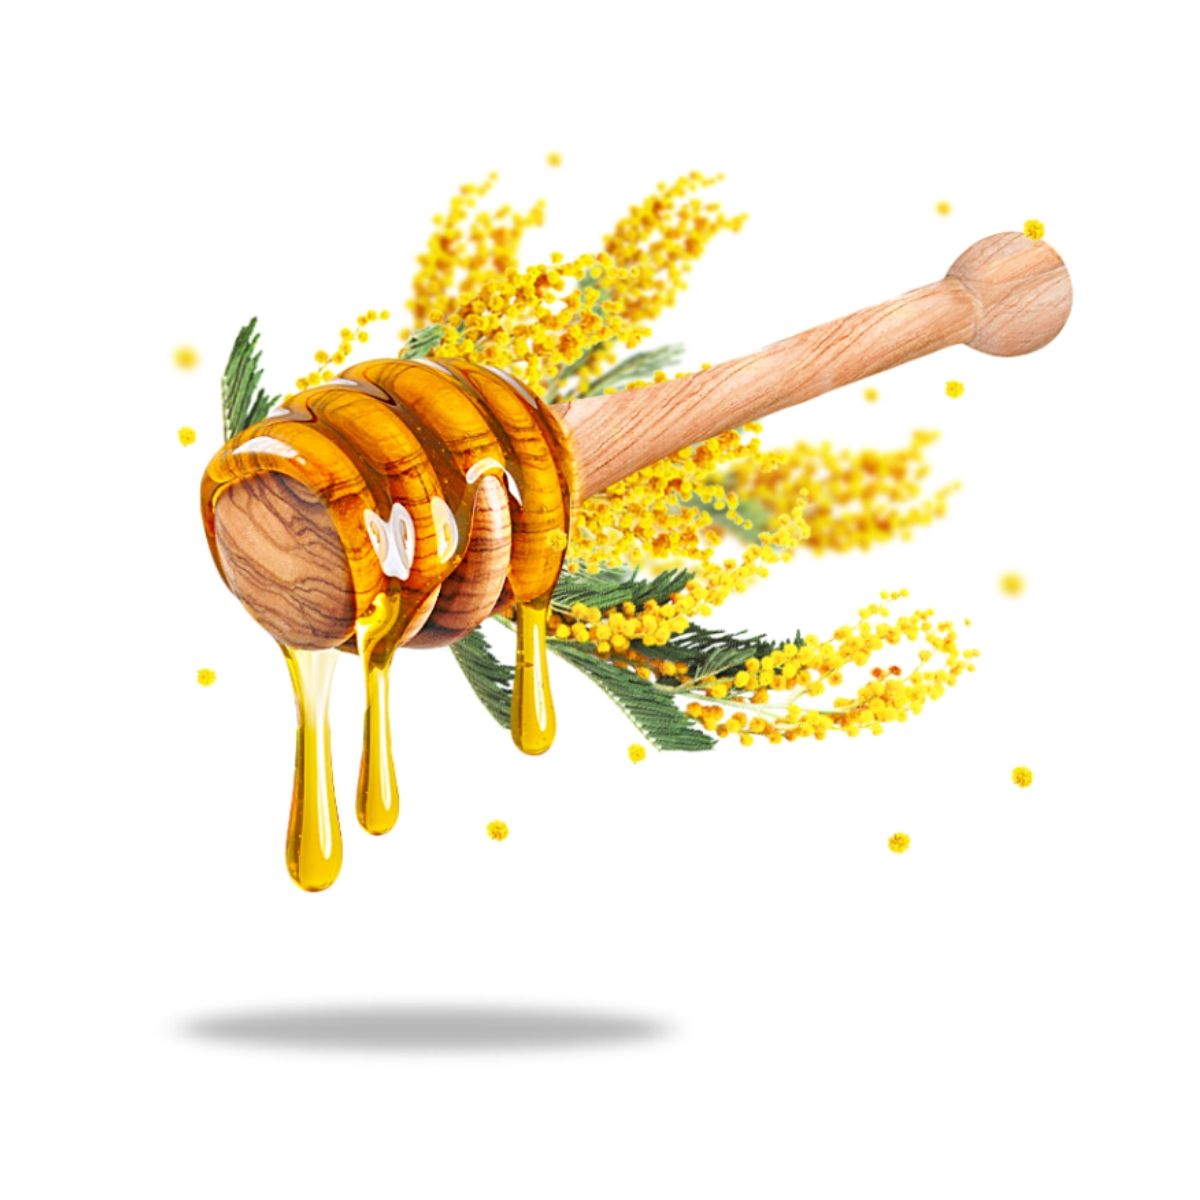 Mật Ong Hoa Keo Acacia Hữu Cơ Sottolestelle Organic Acacia Honey 280g